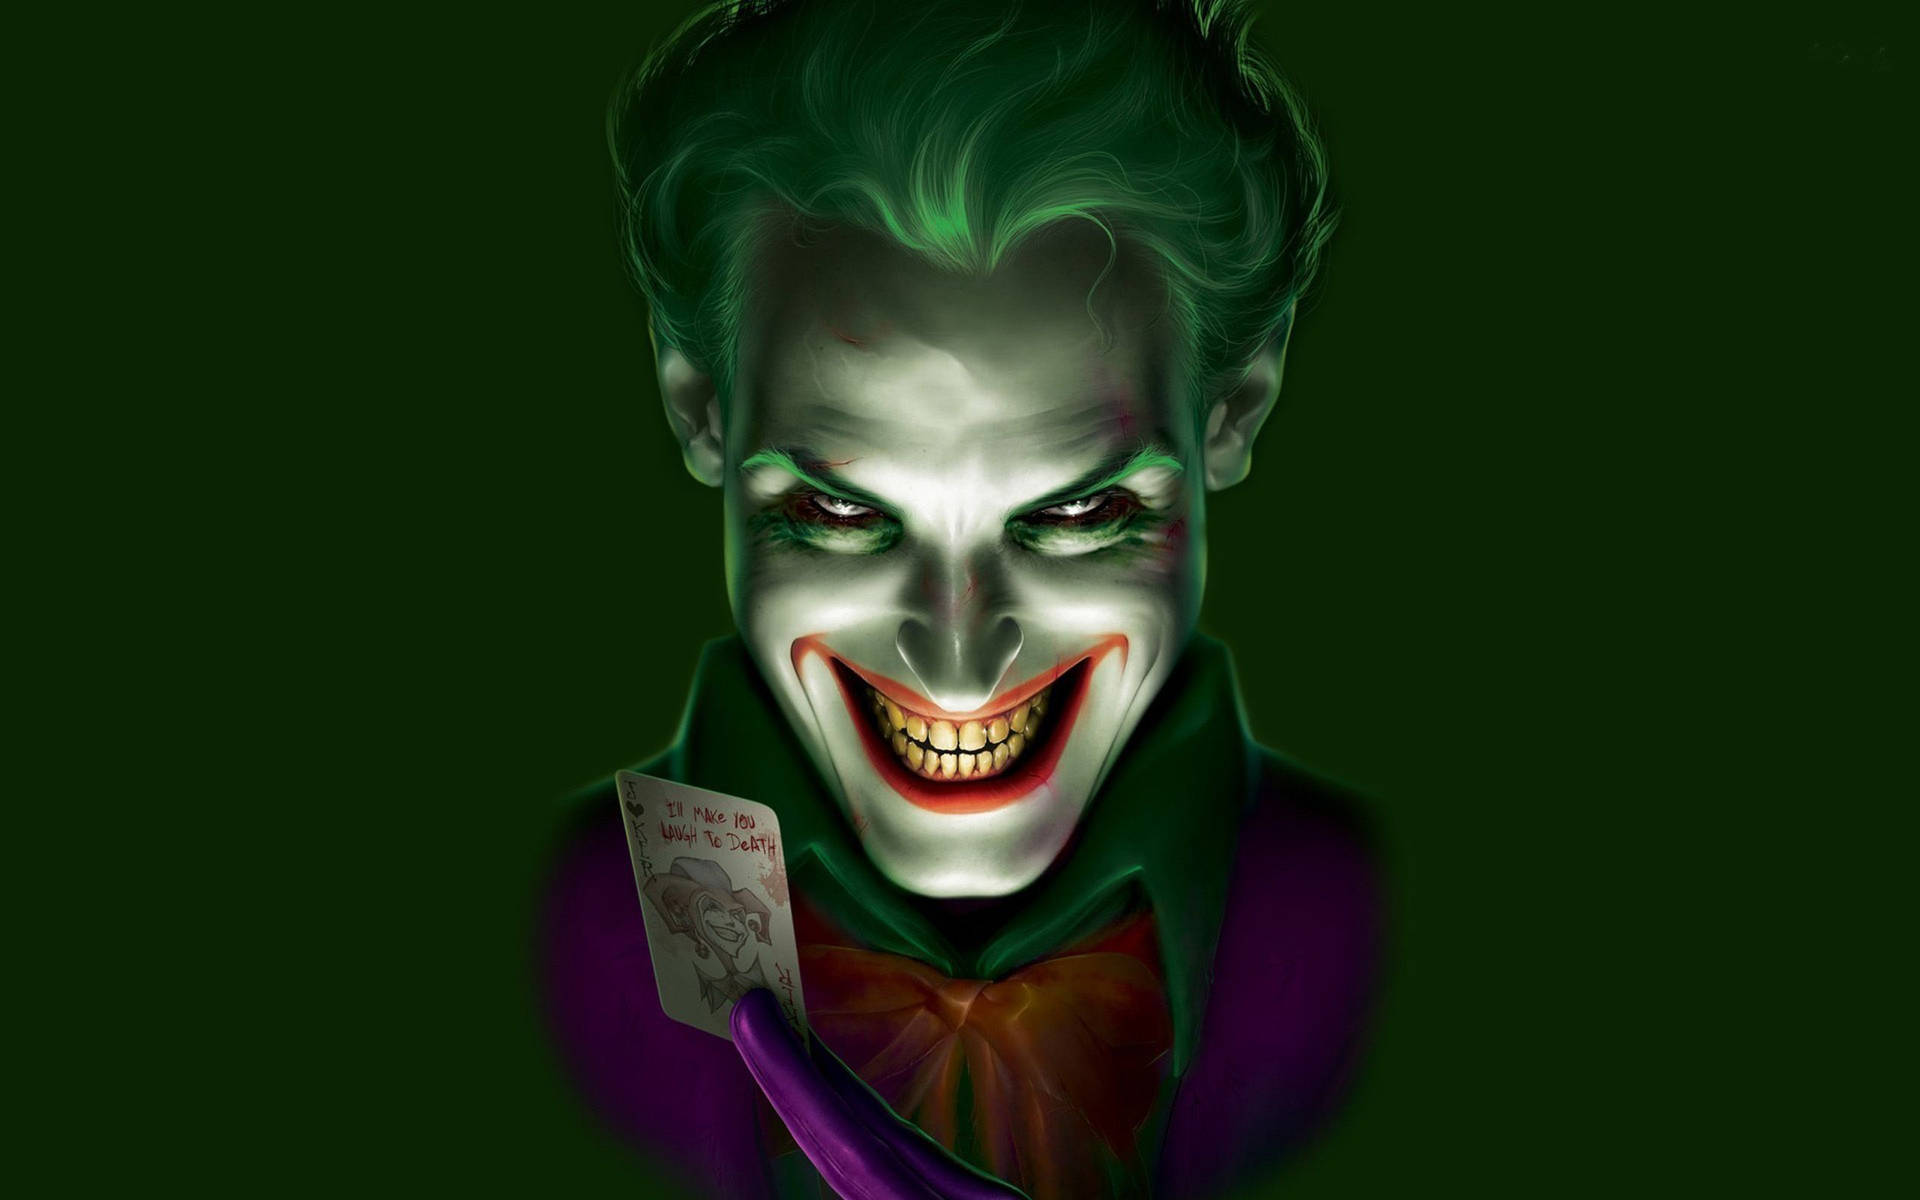 Smiling Joker With Green Hair